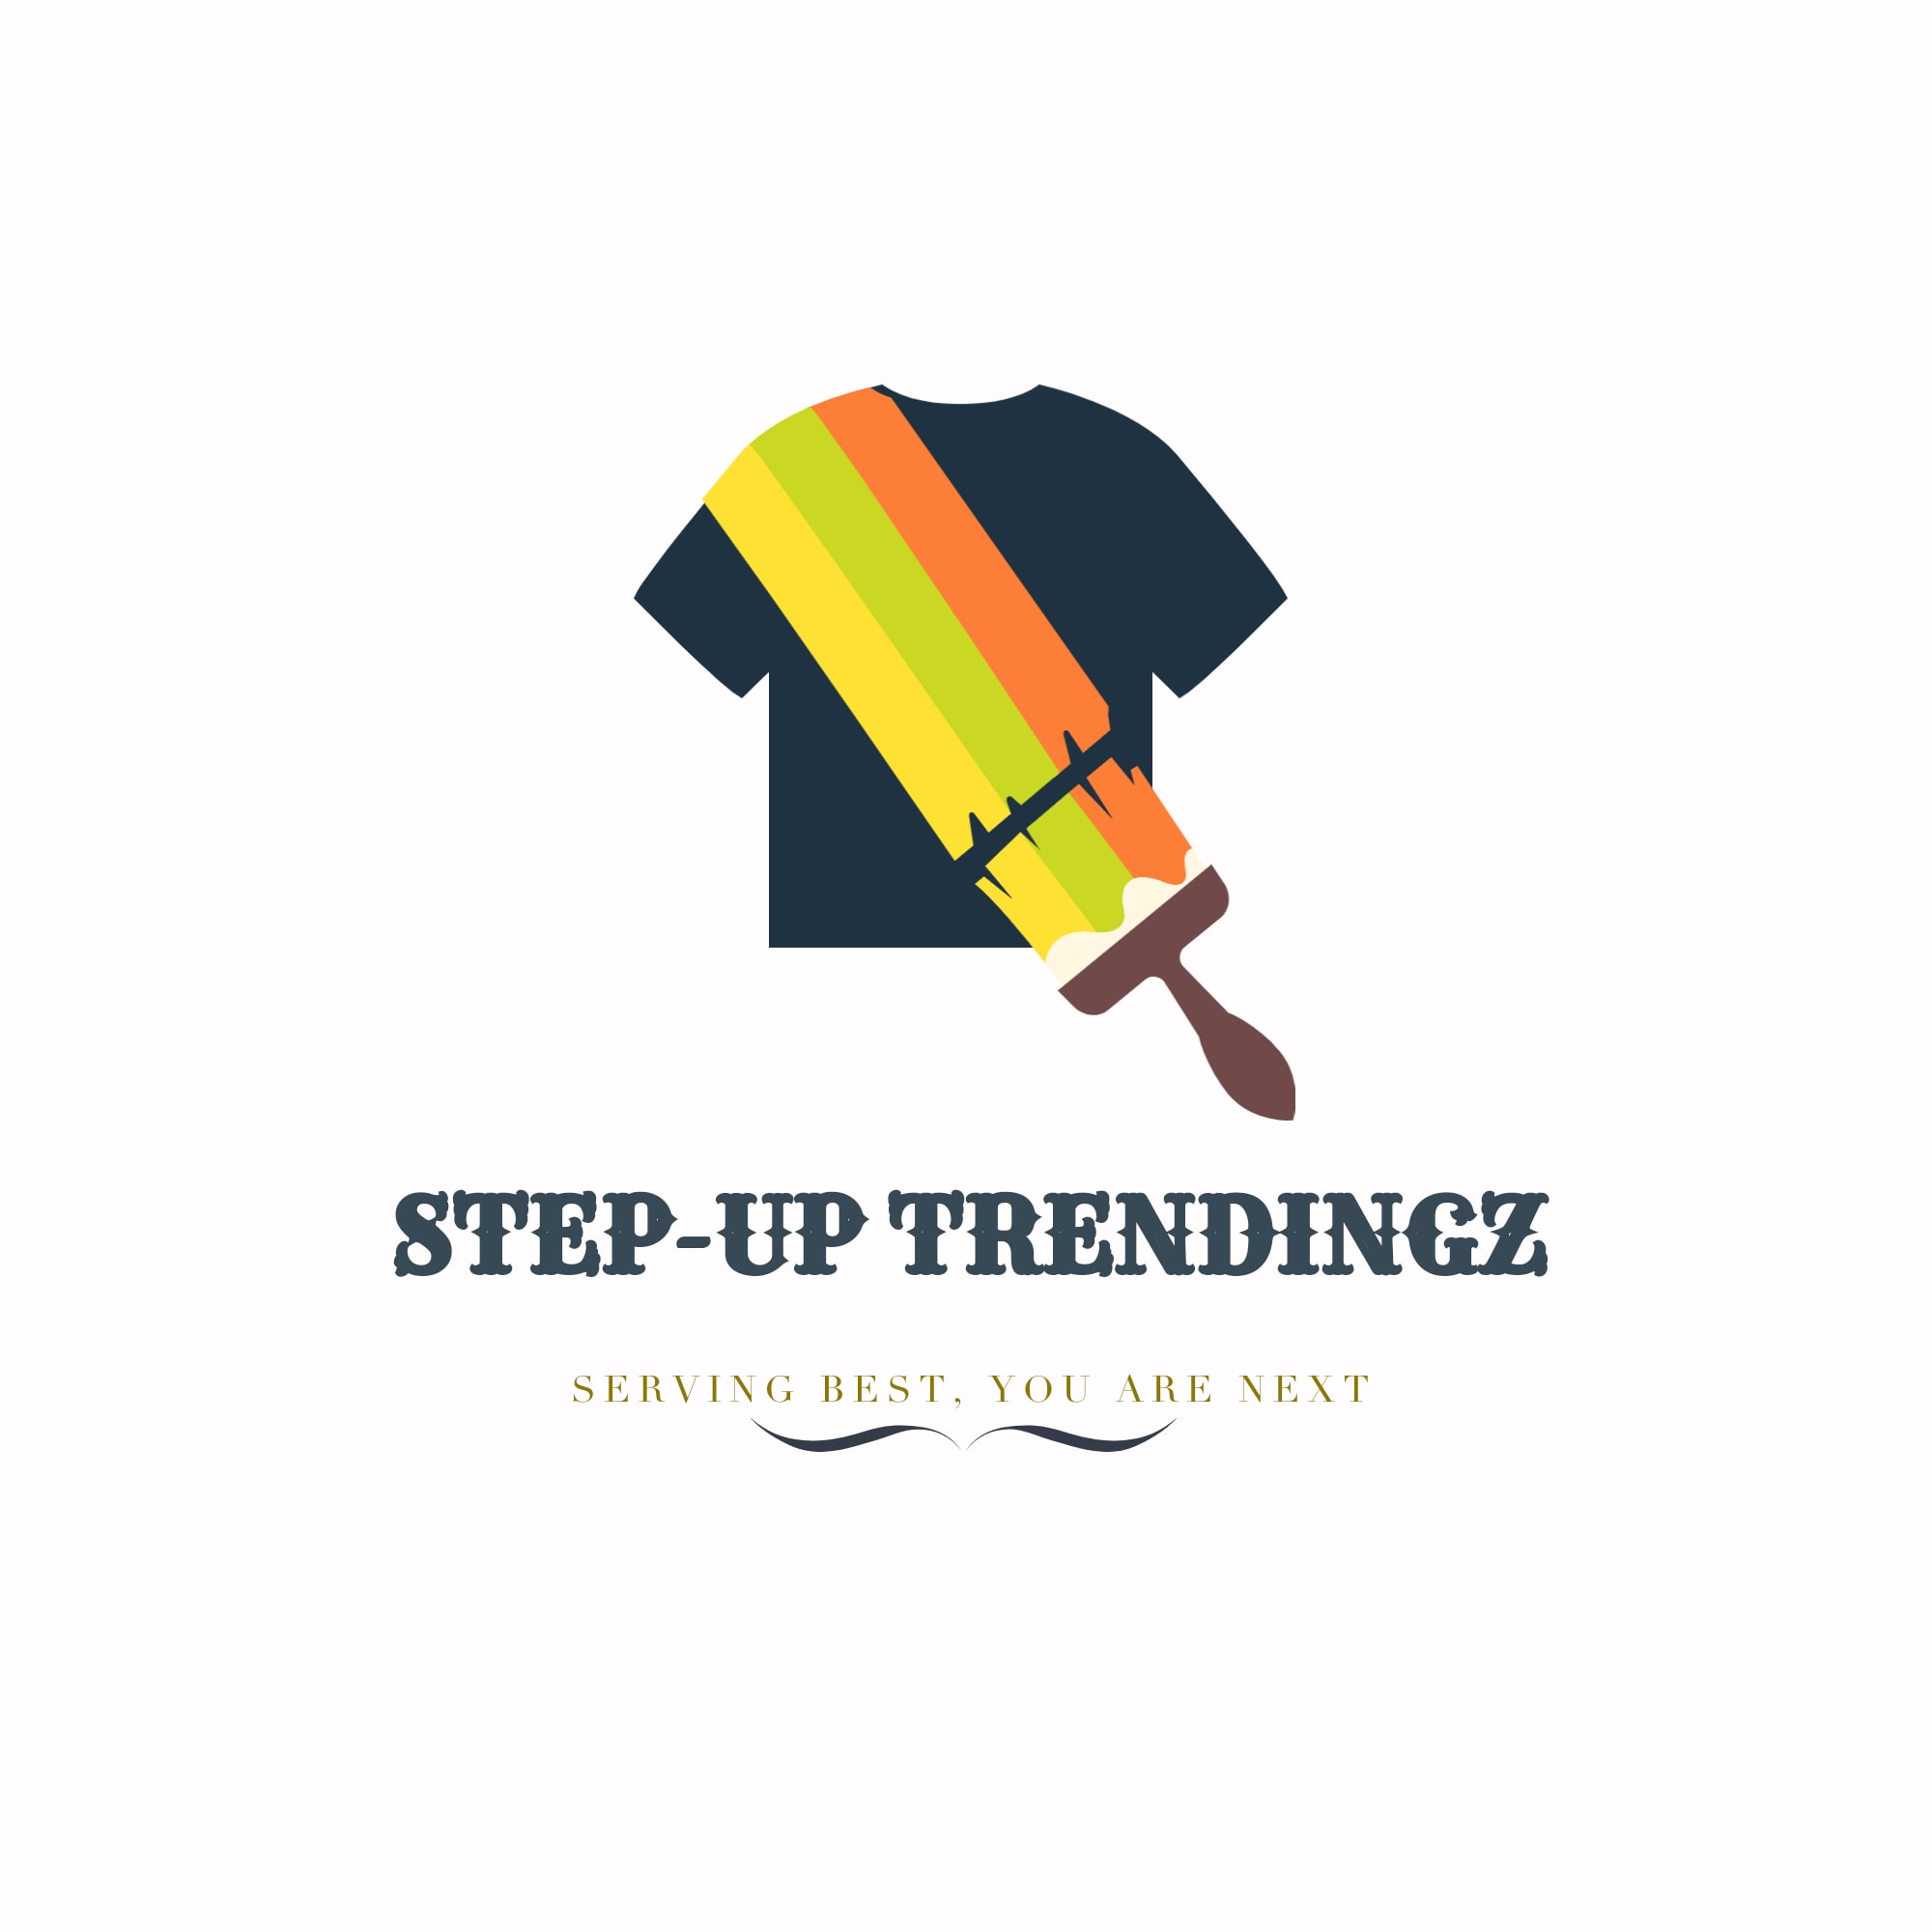 Step-up Trendingz